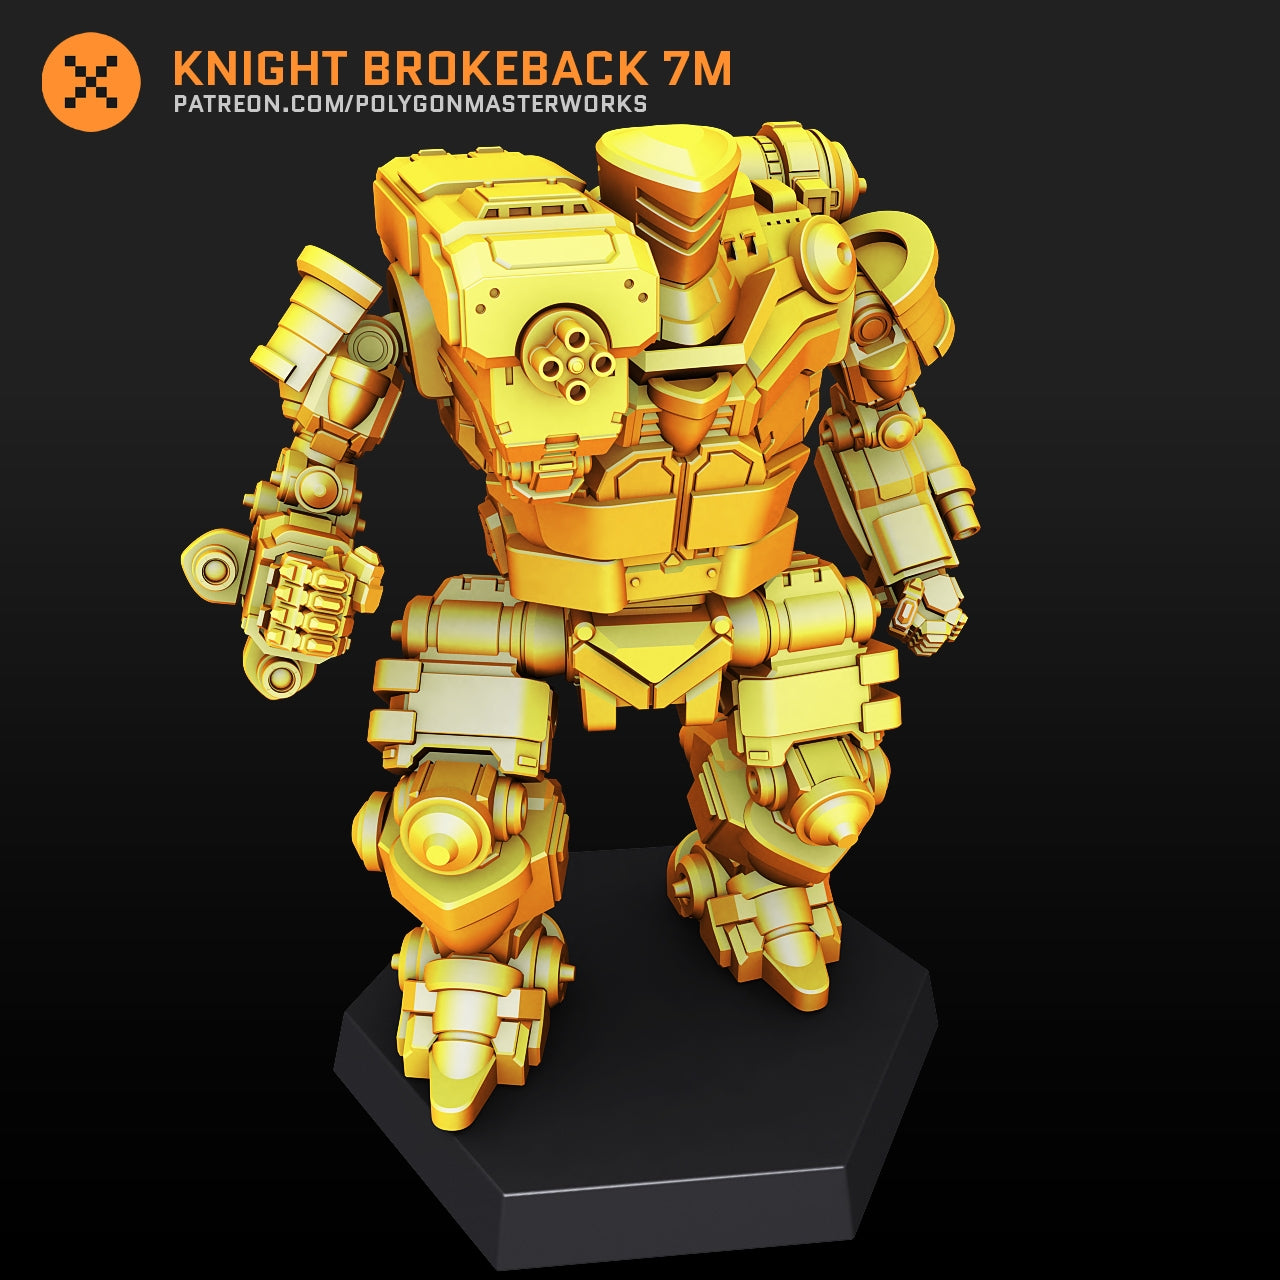 Knight Brokeback 7M (By PMW) Alternate Battletech Mechwarrior Miniatures